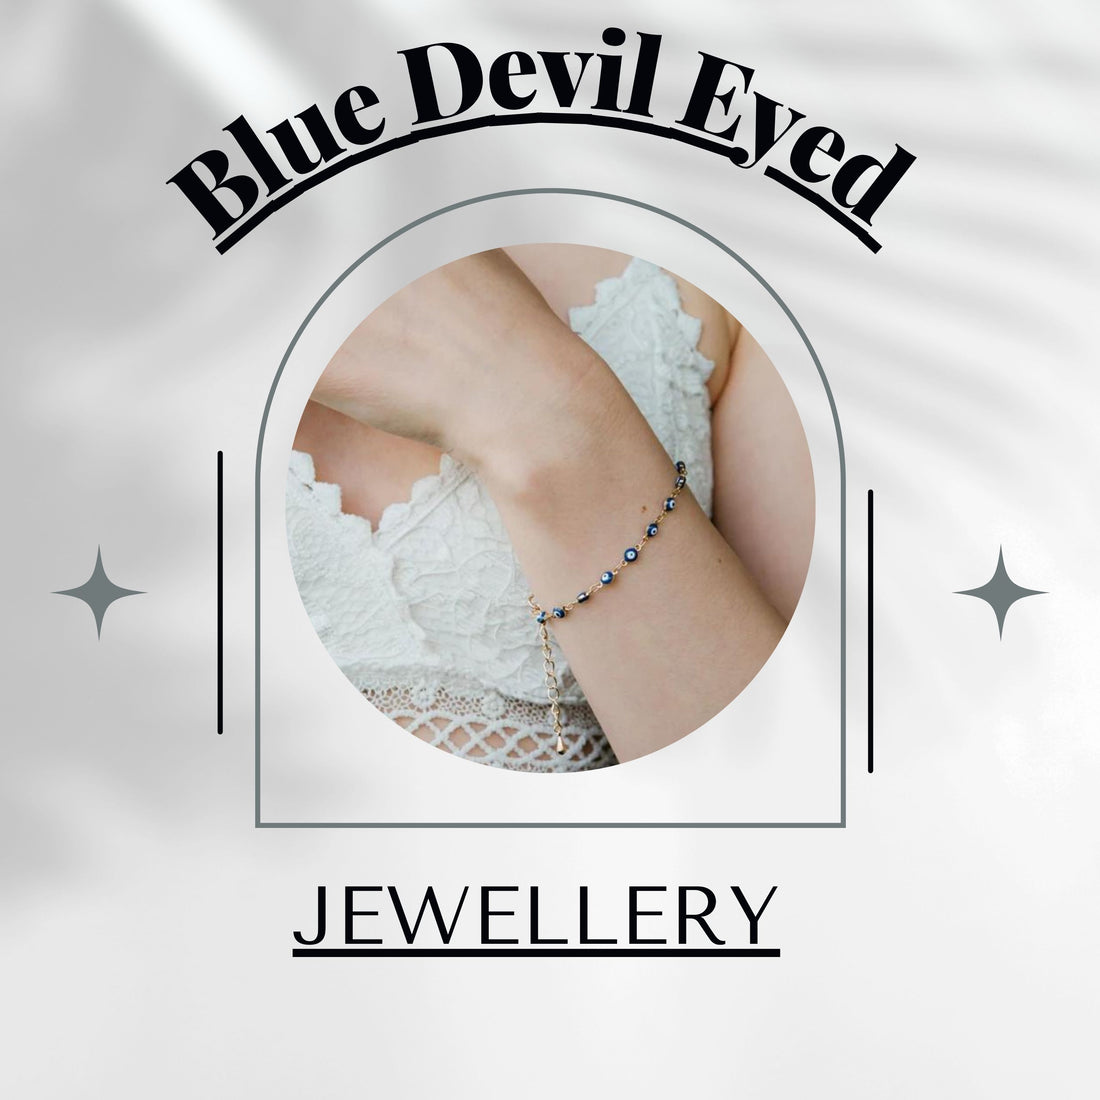 Blue Devil Eyed Jewellery